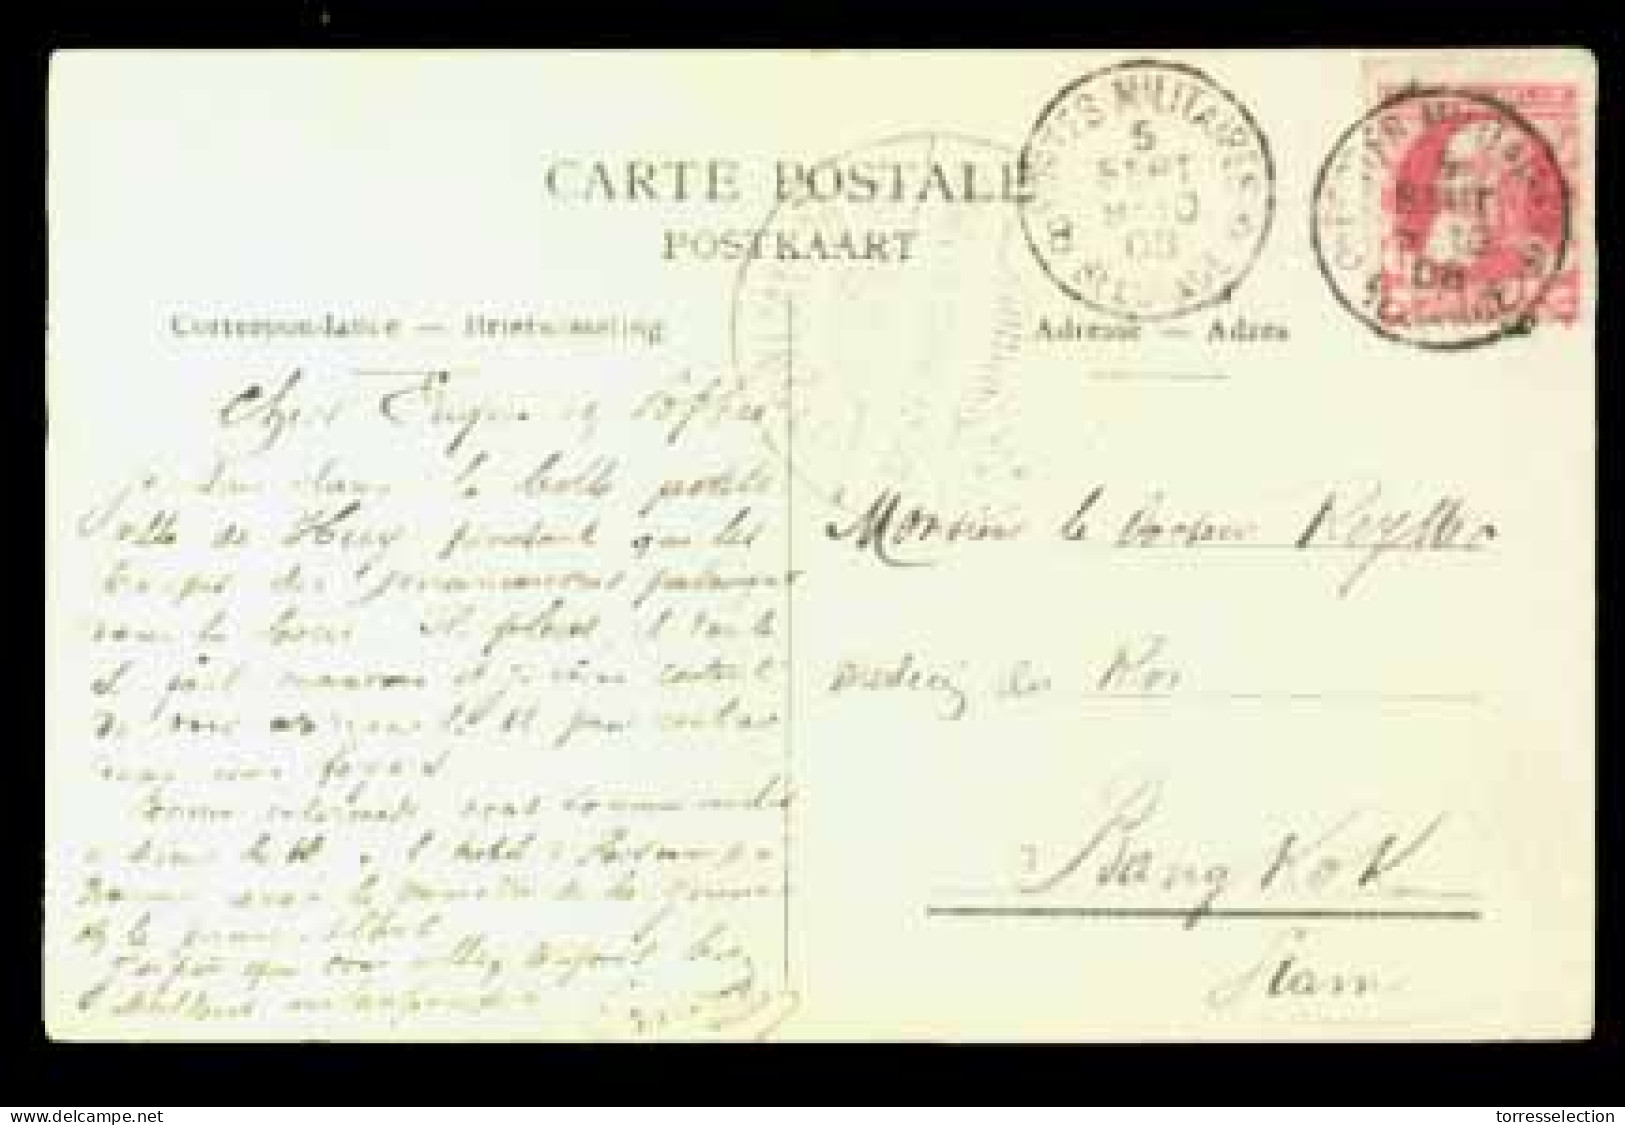 SIAM. 1908. Huy (Belgium) To Bangkok. P.P.C. Franked With Belgium 10 C.red, Tied By "POSTES MILITAIRES/8/8/BELGIQUE" C.d - Siam